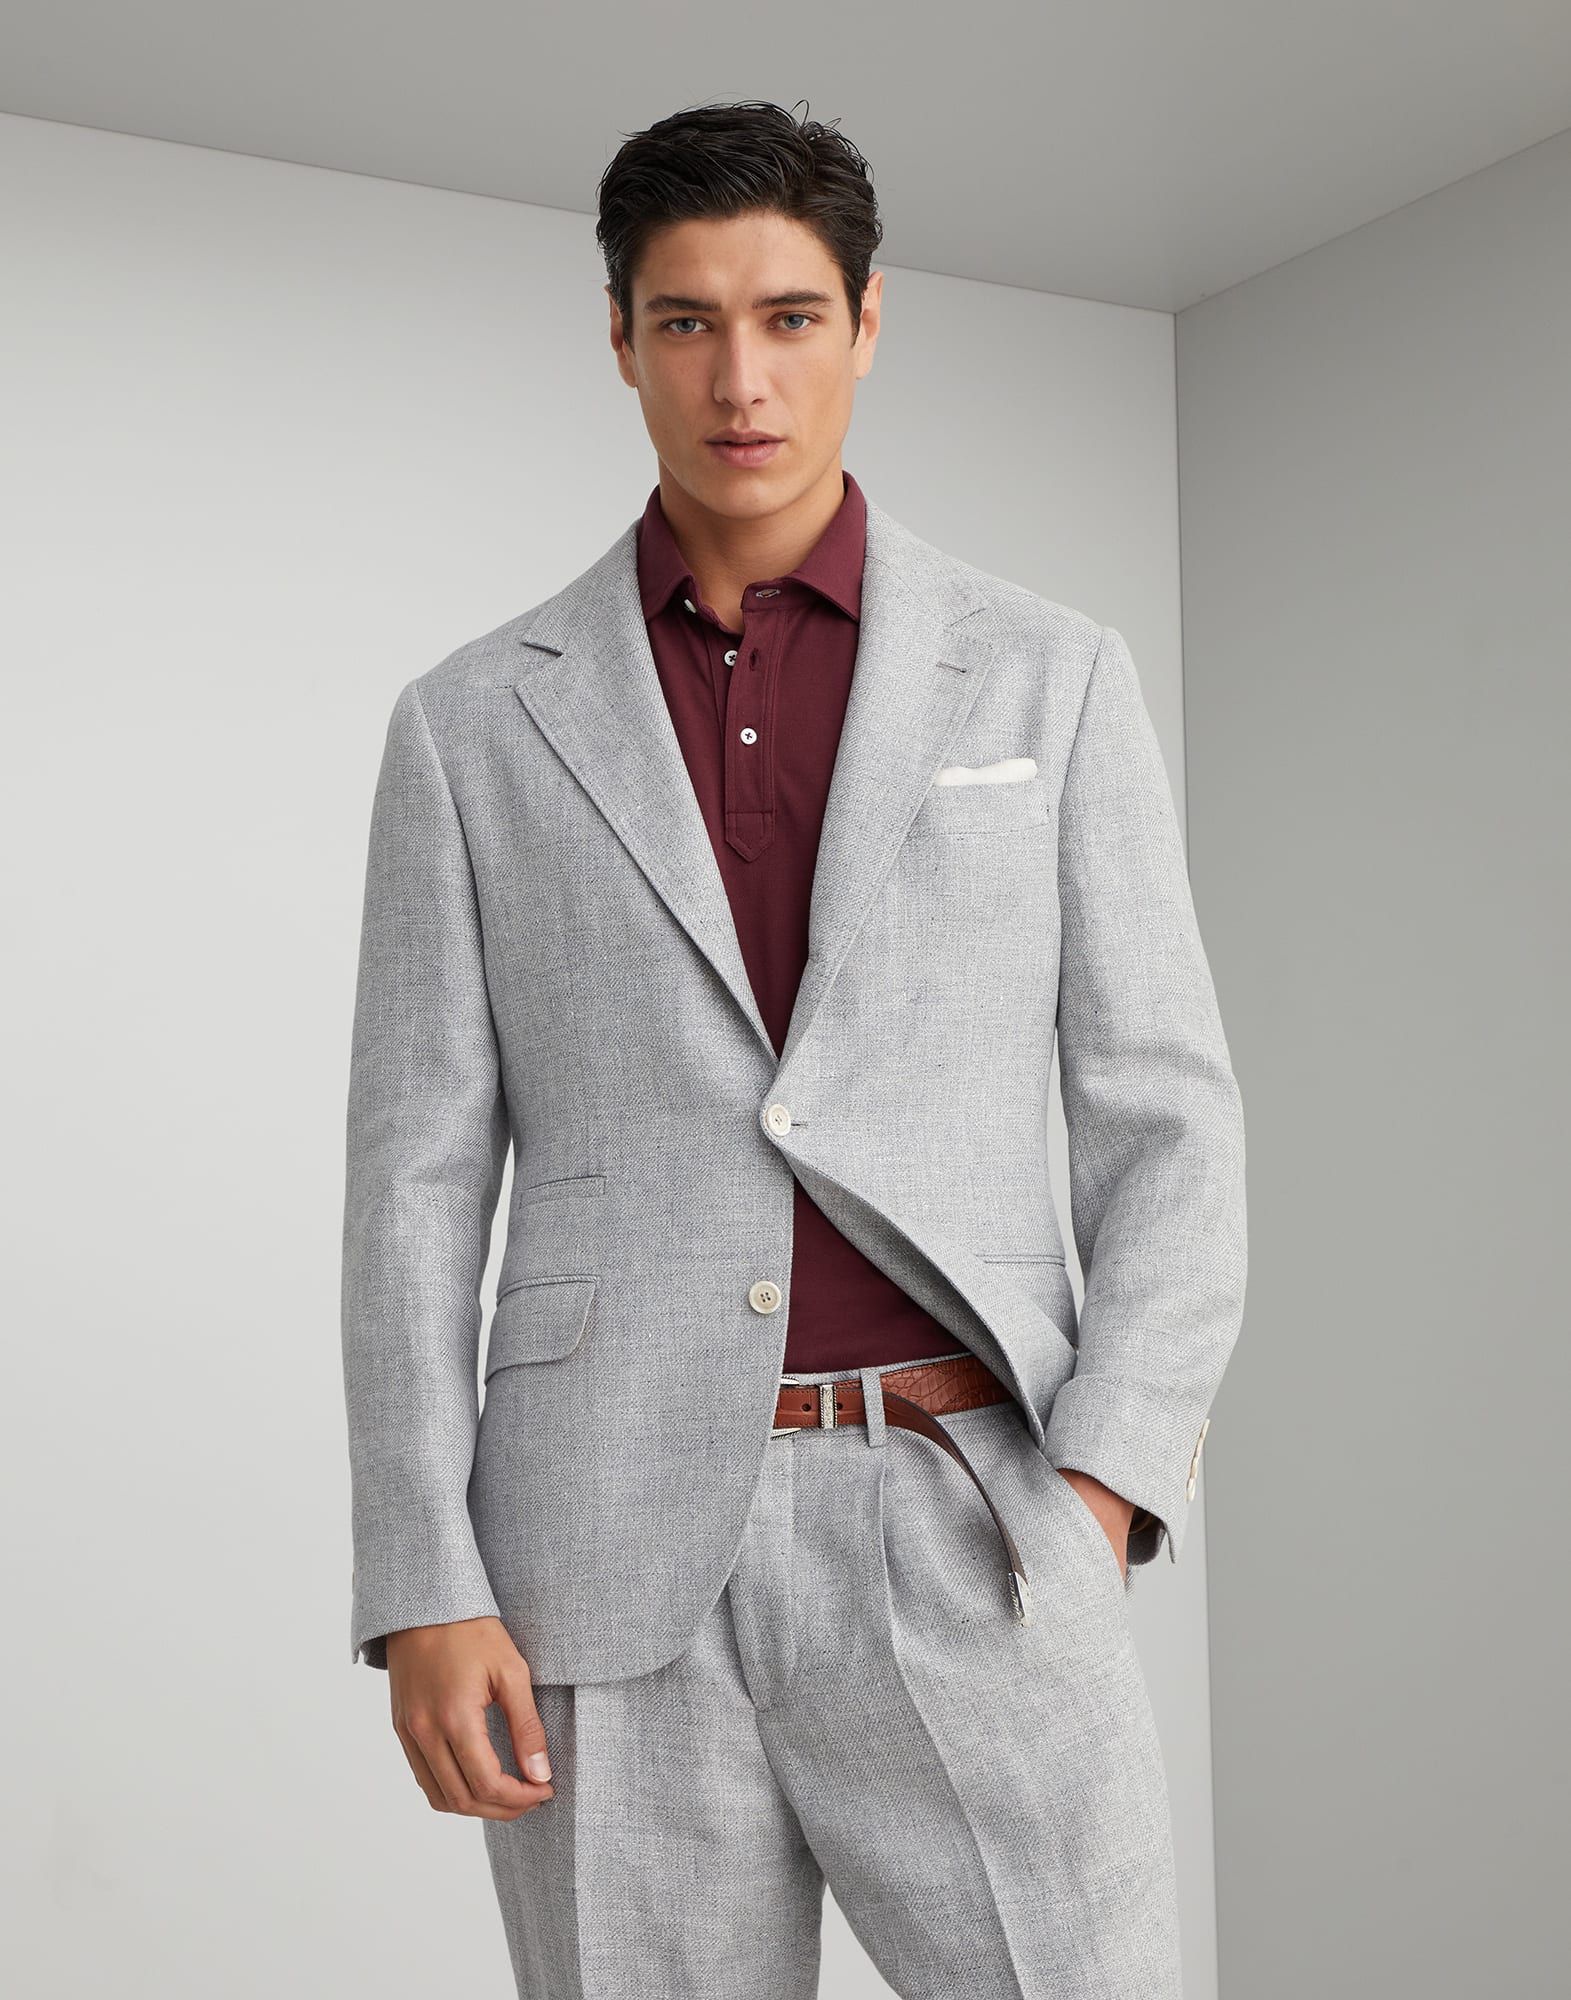 Men's blazers and waistcoats